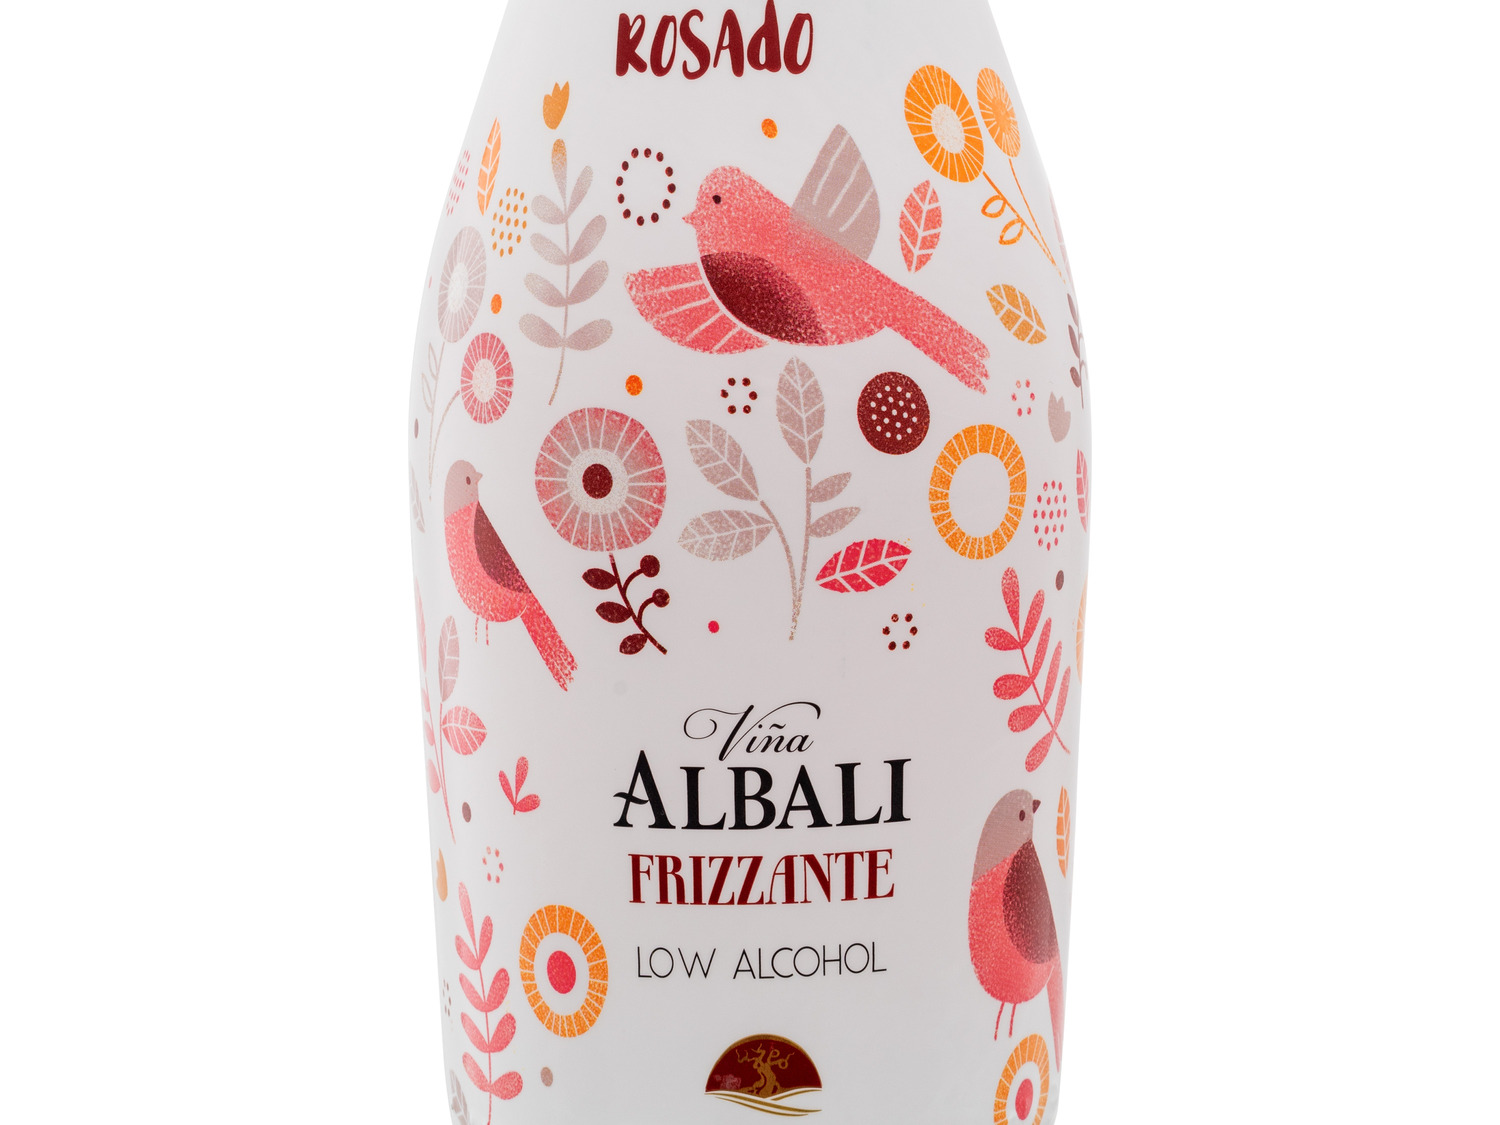 Albali Vina fe… Low Frizzante Alcohol, teilweise Rosado